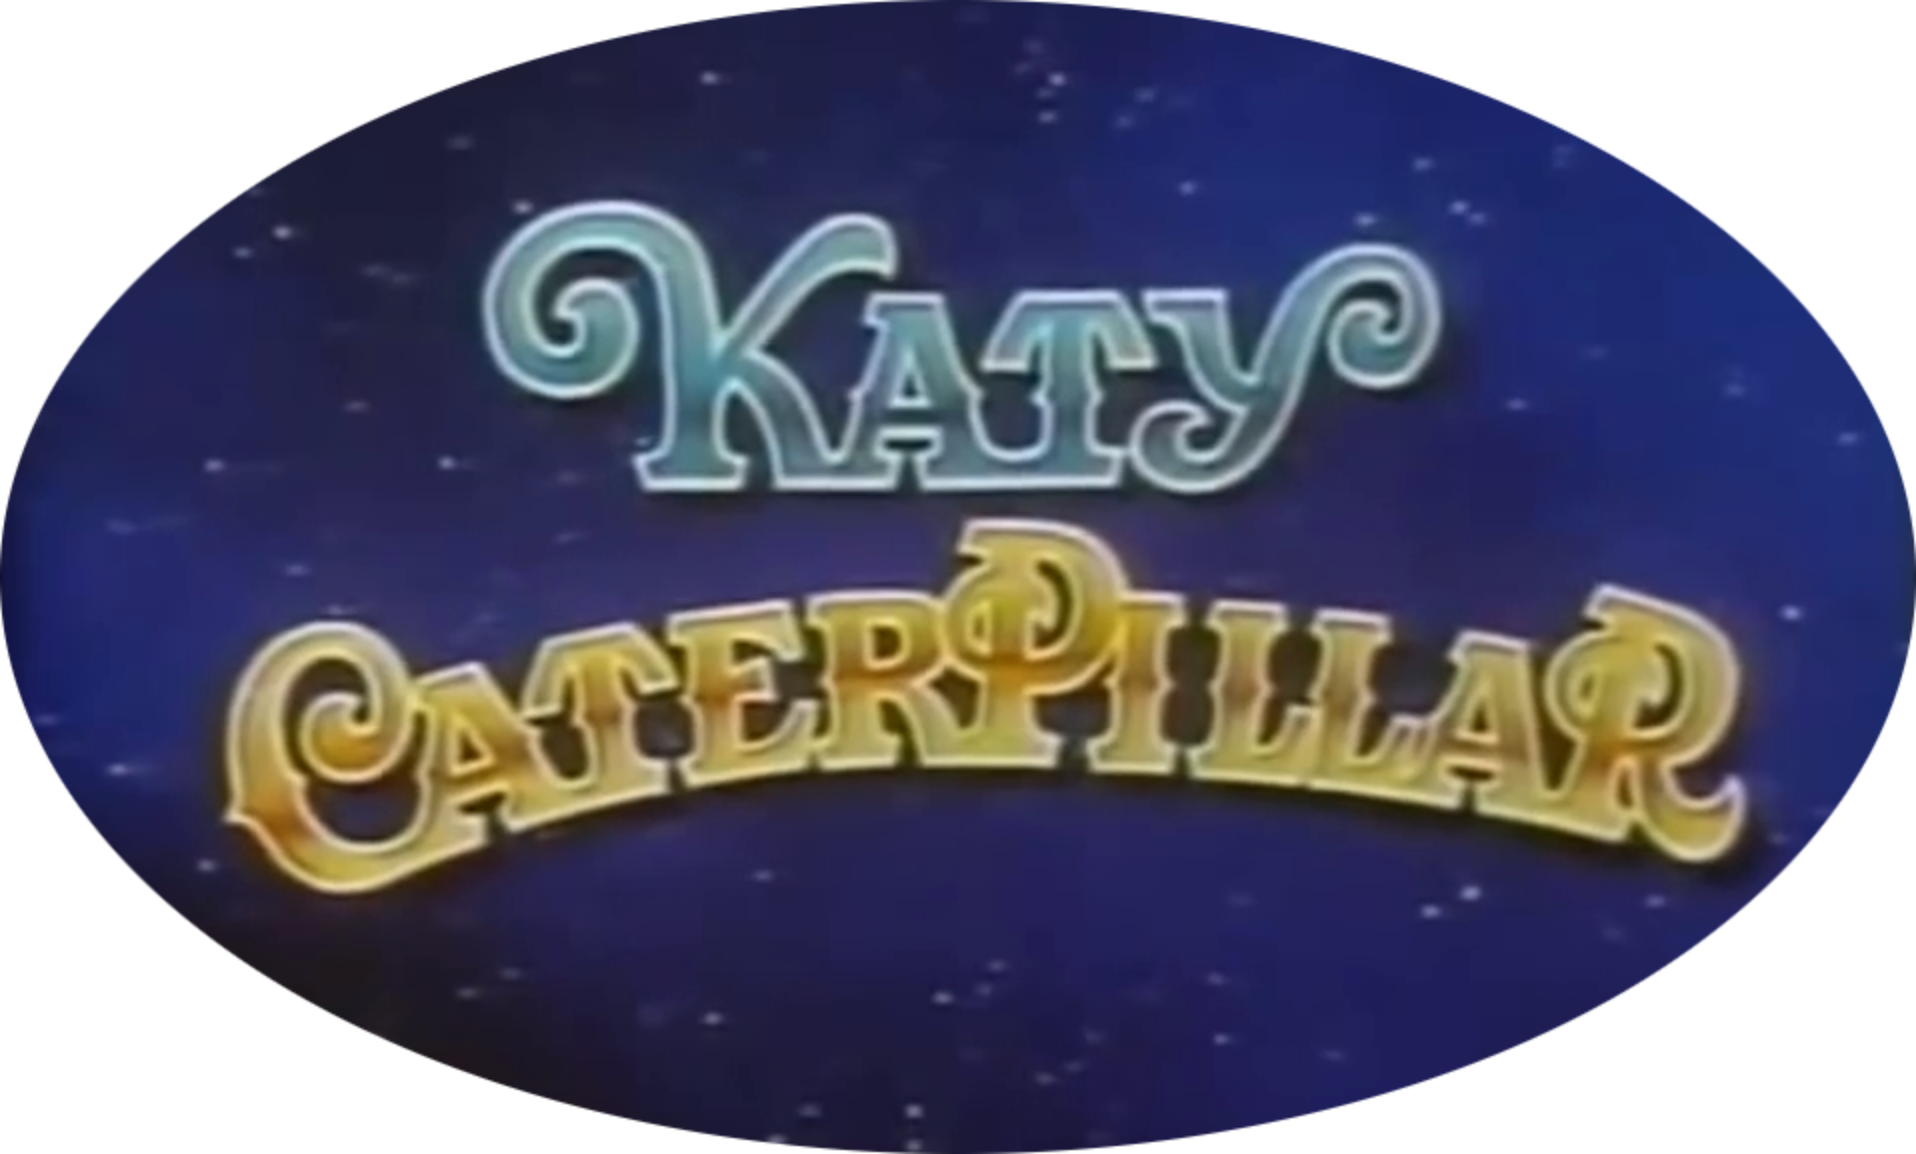 Katy Caterpillar 1 Dvd Box Set Backtothe80sdvds